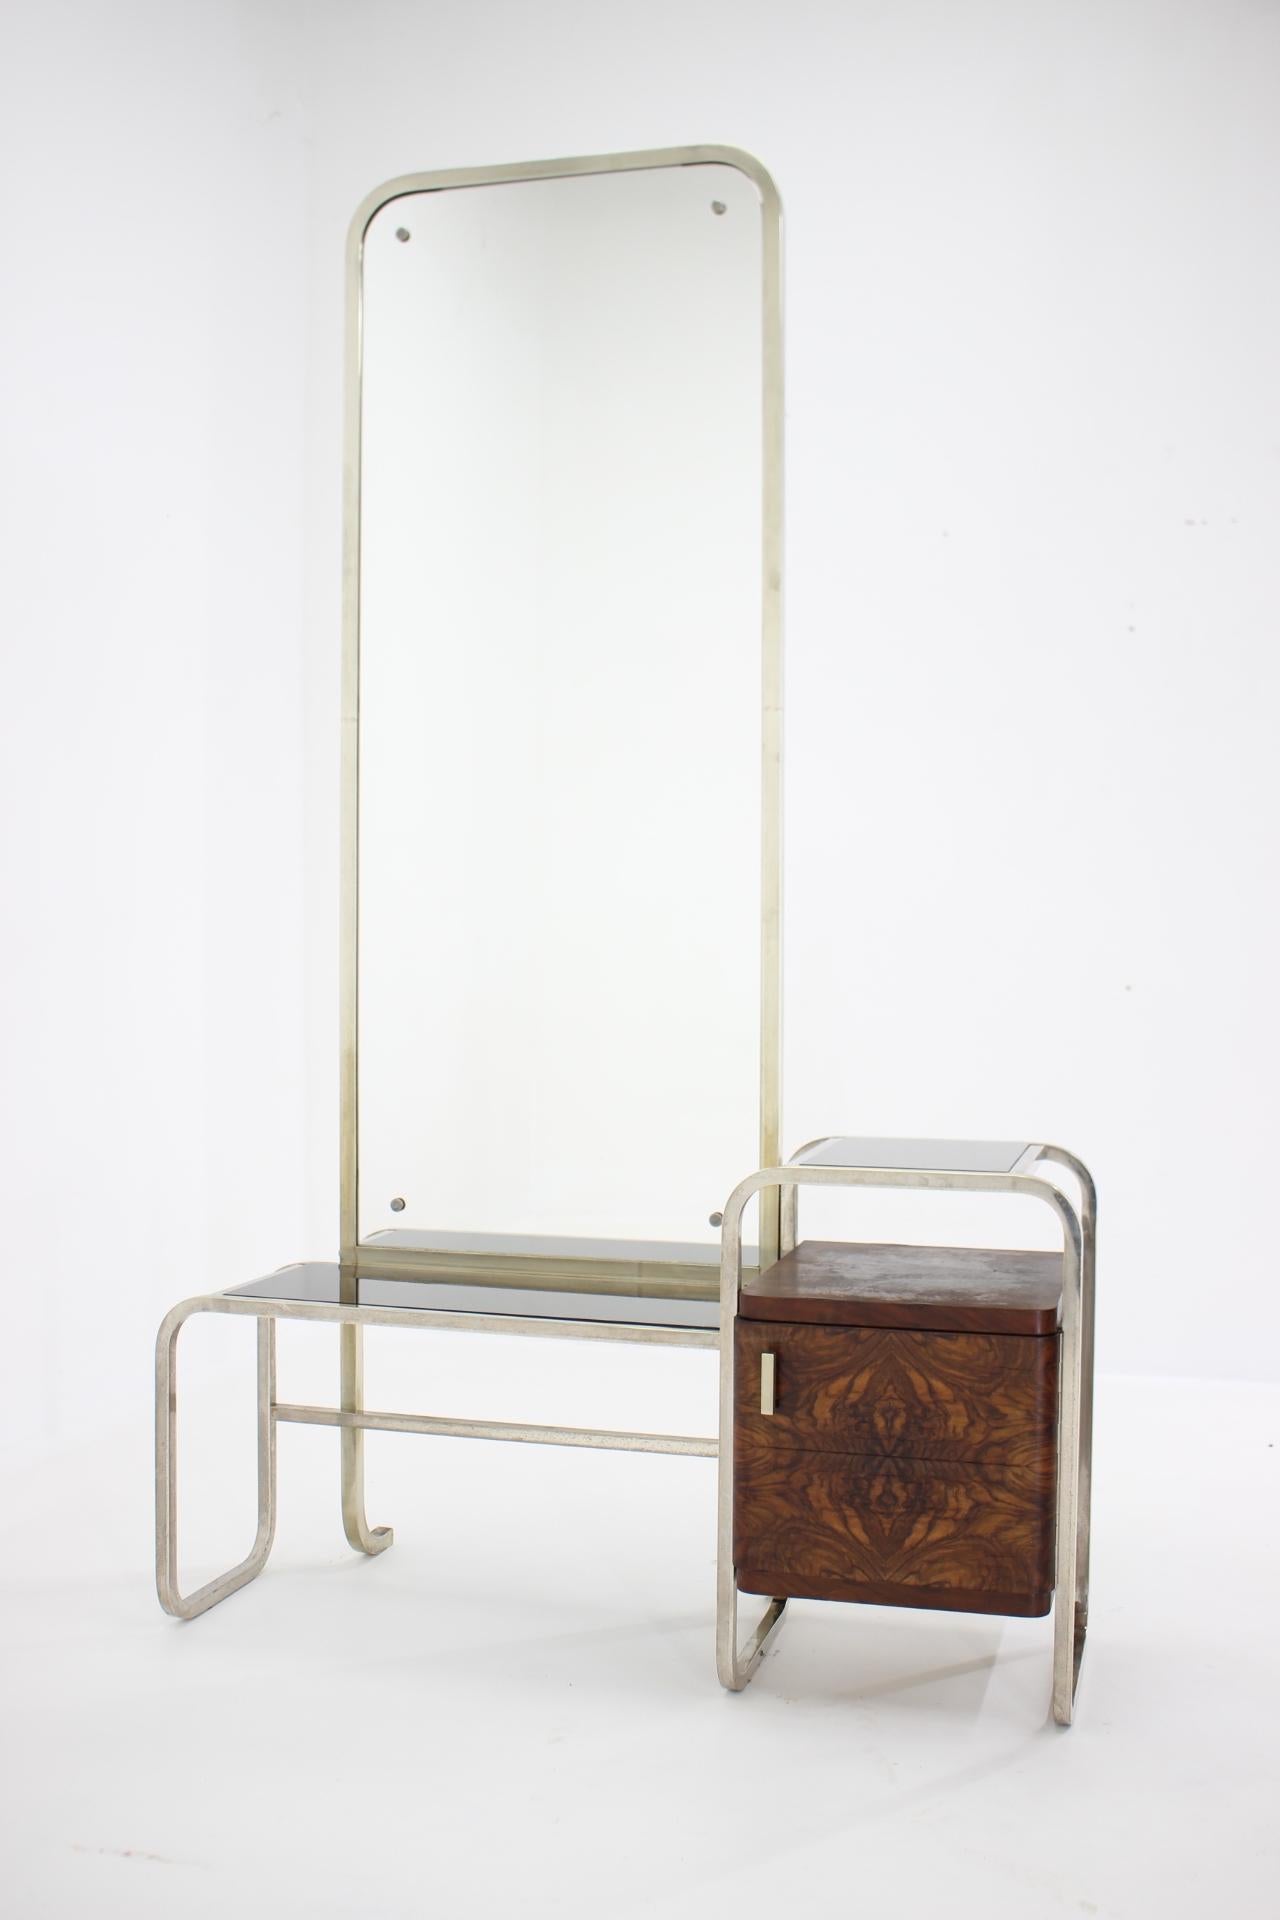 Czech Chrome Art Deco Bauhaus Dressing Table, 1930s For Sale